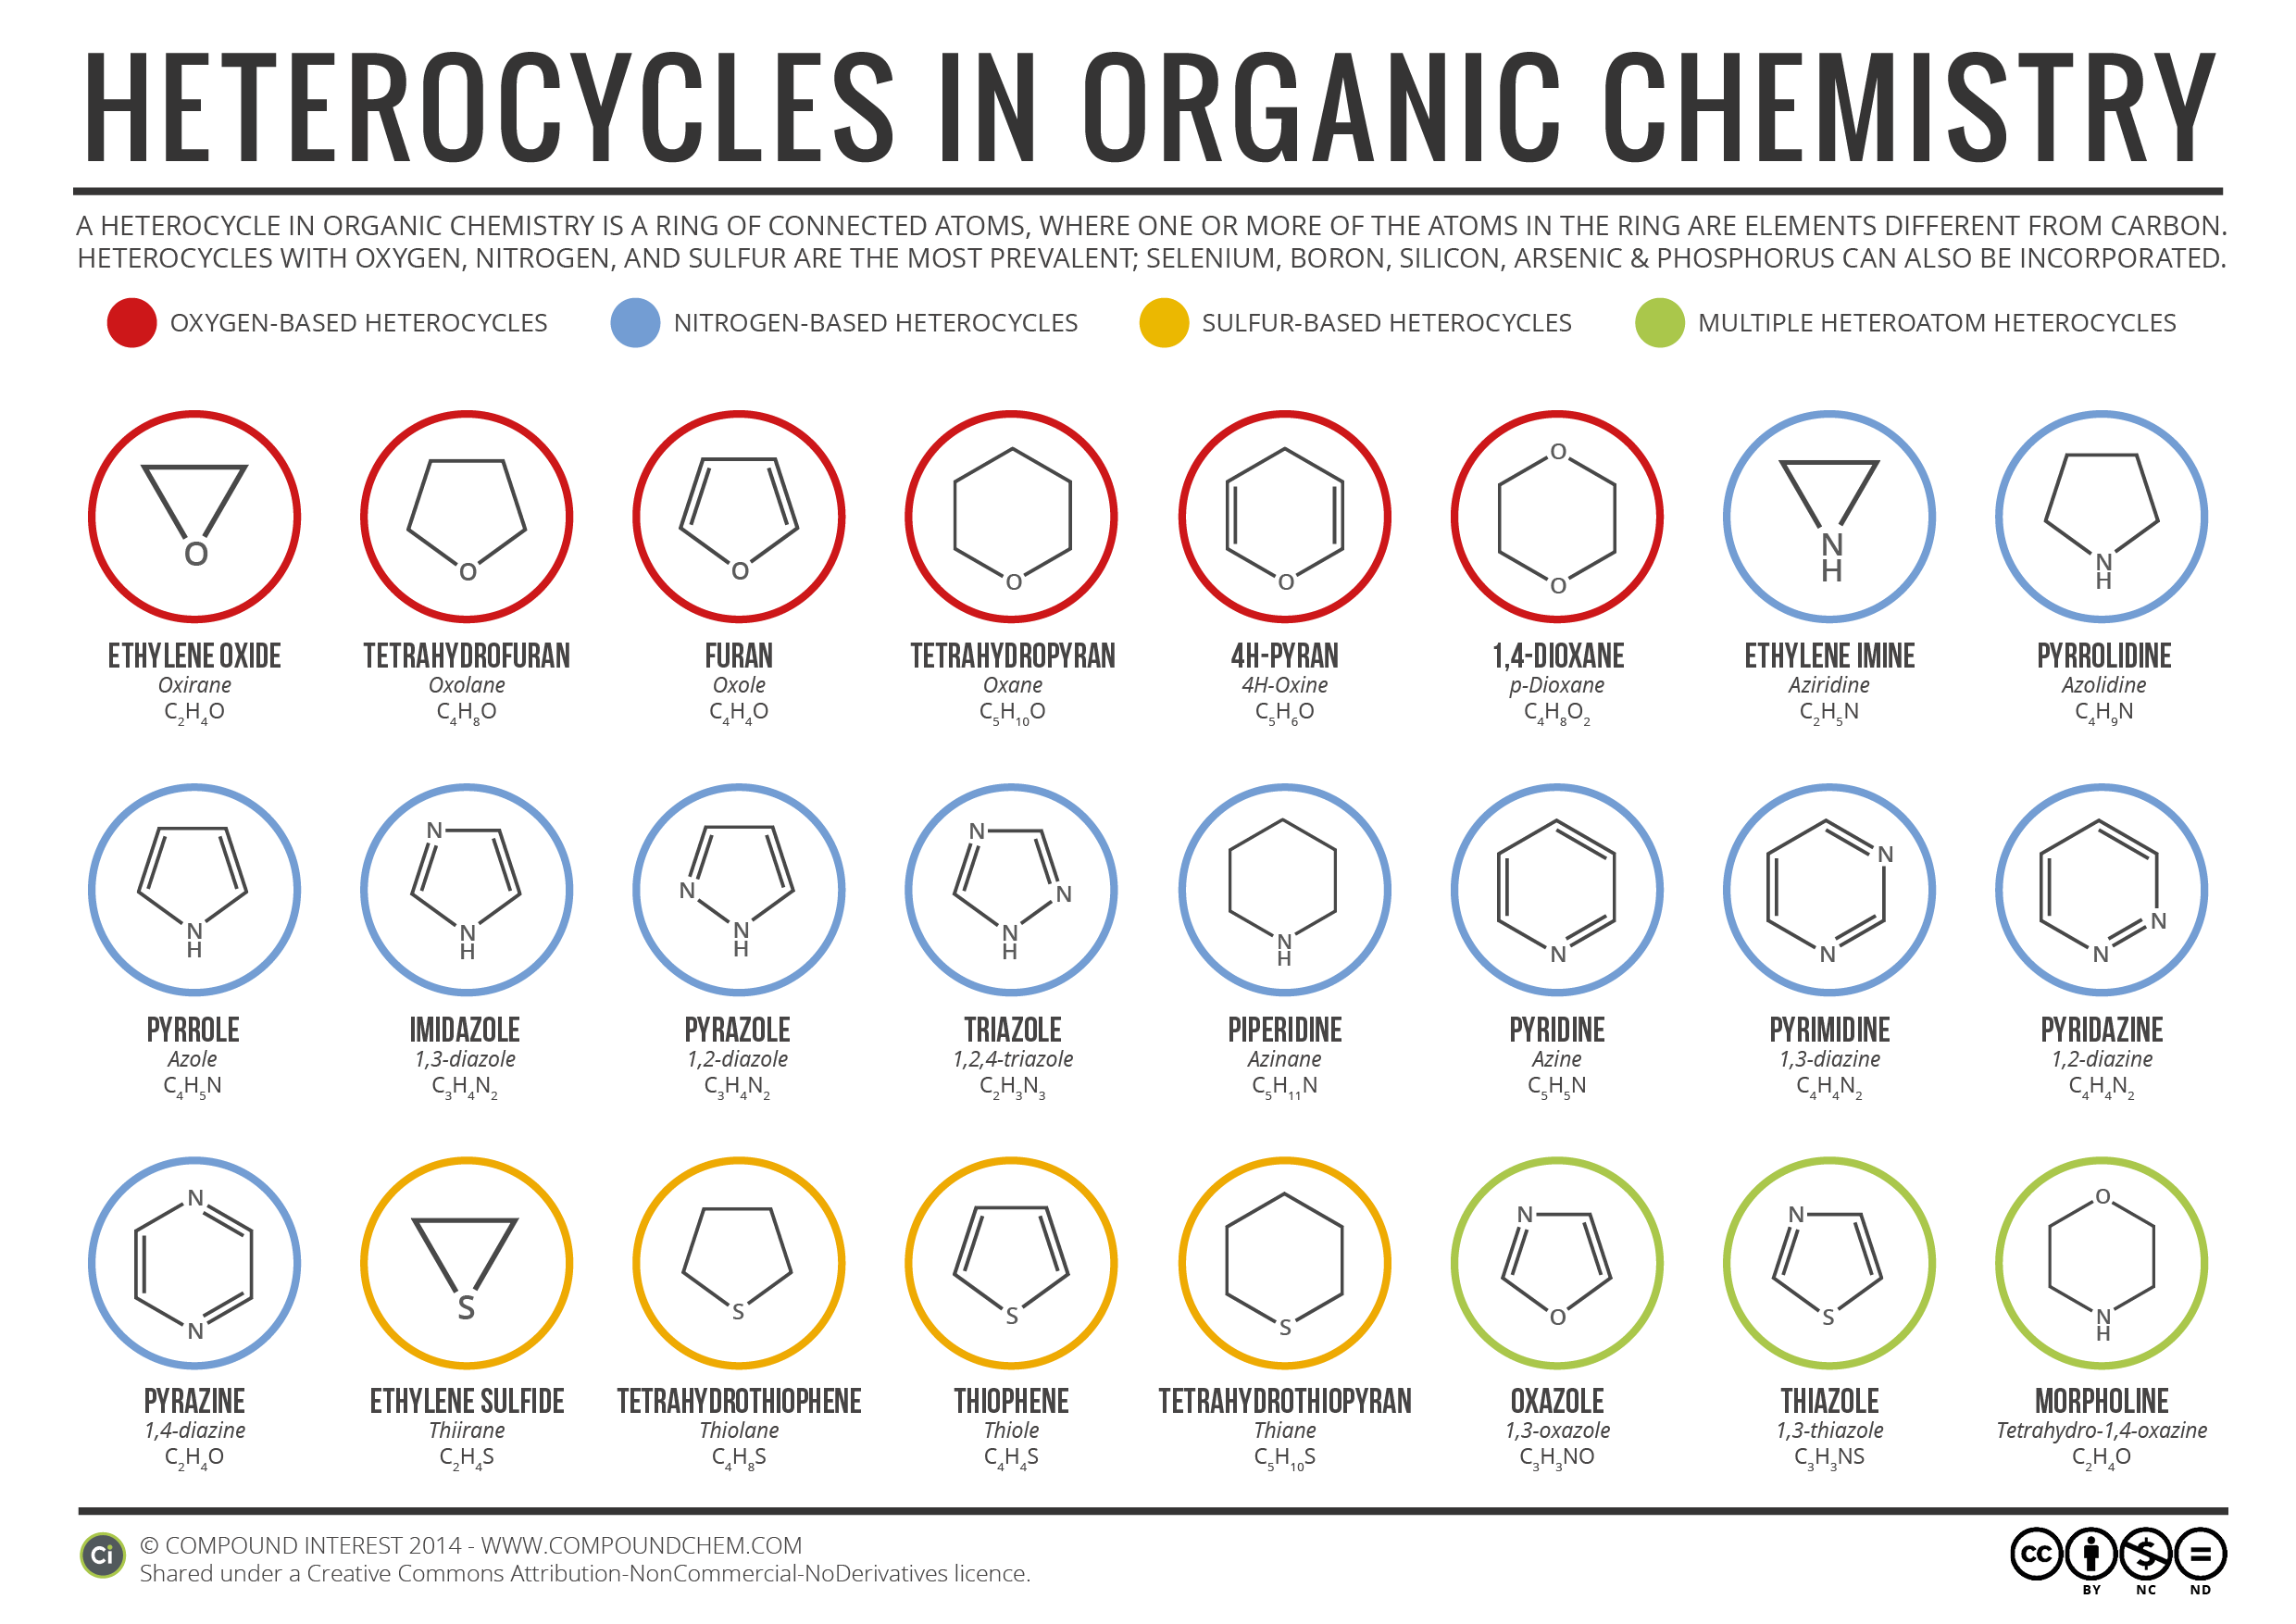 Heterocycles in Organic Chemistry